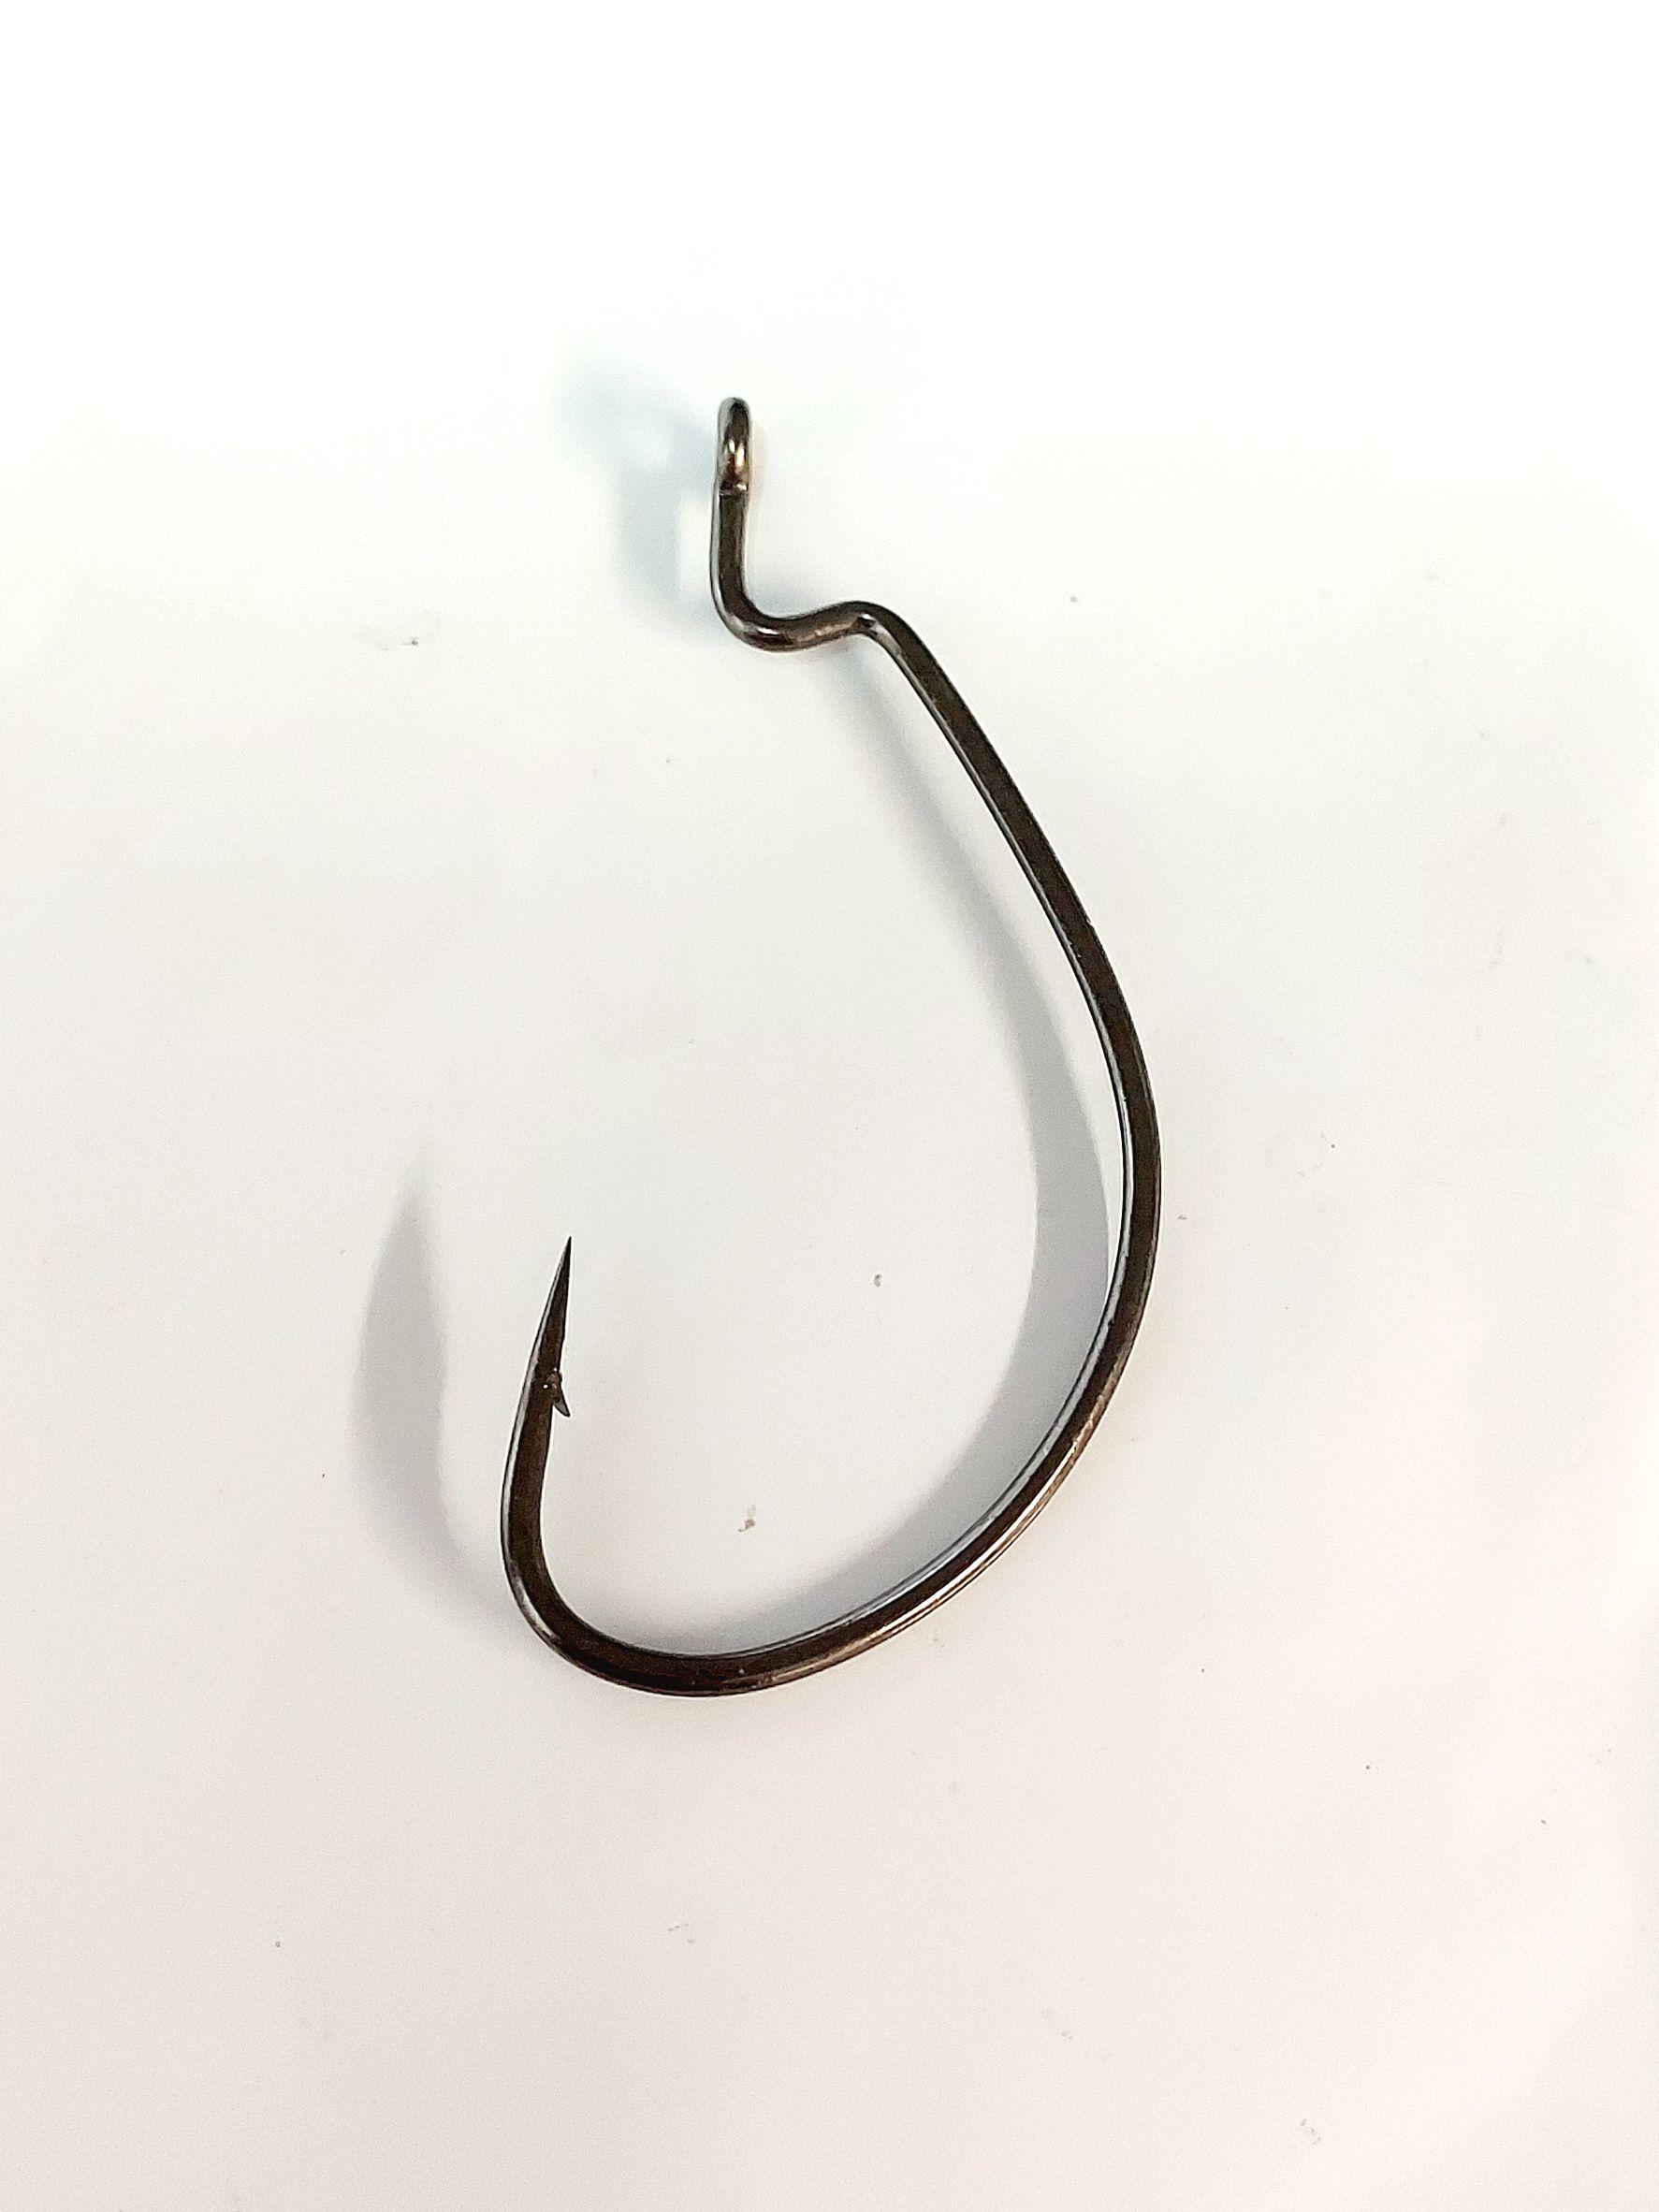 EWG HOOKS Carbon fiber steel cut fishing hooks bronze - Get Hooked